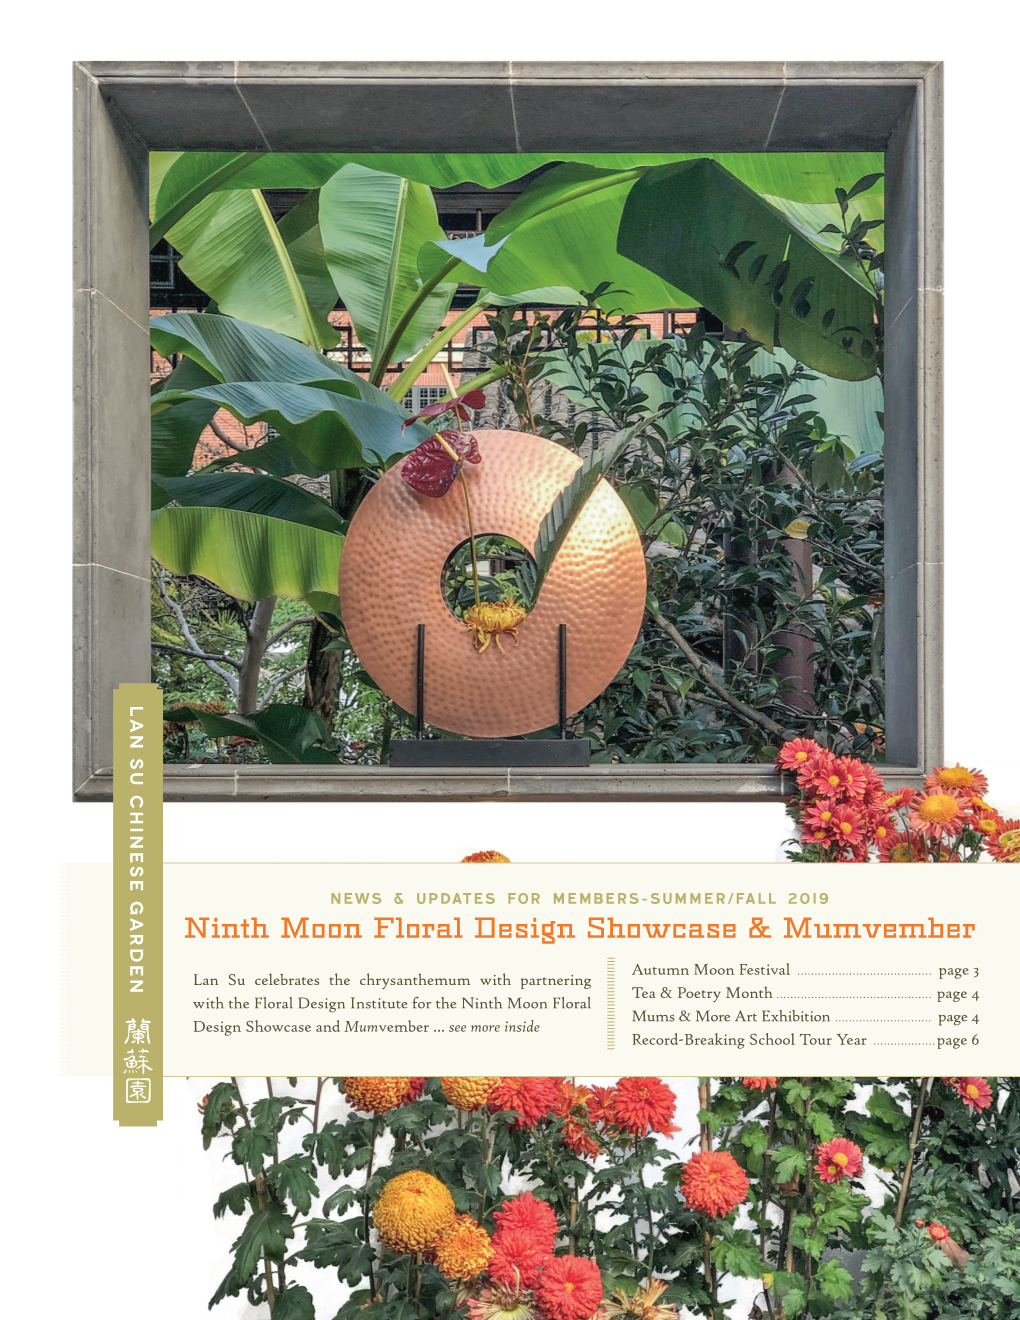 Ninth Moon Floral Design Showcase & Mumvember